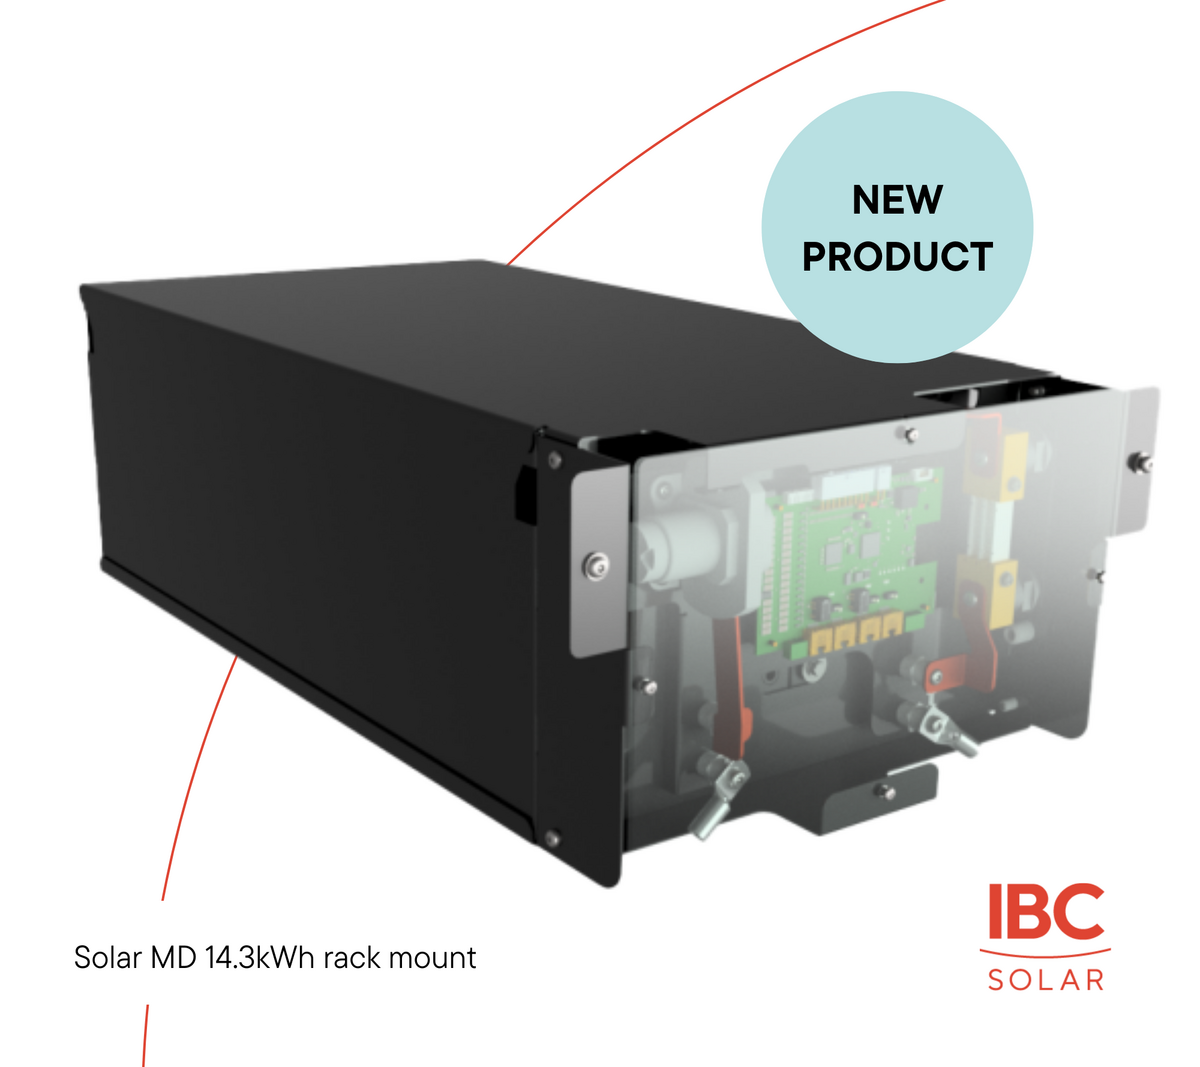 ibc-solar-za-product-news-new-solar-md-battery-portfolio